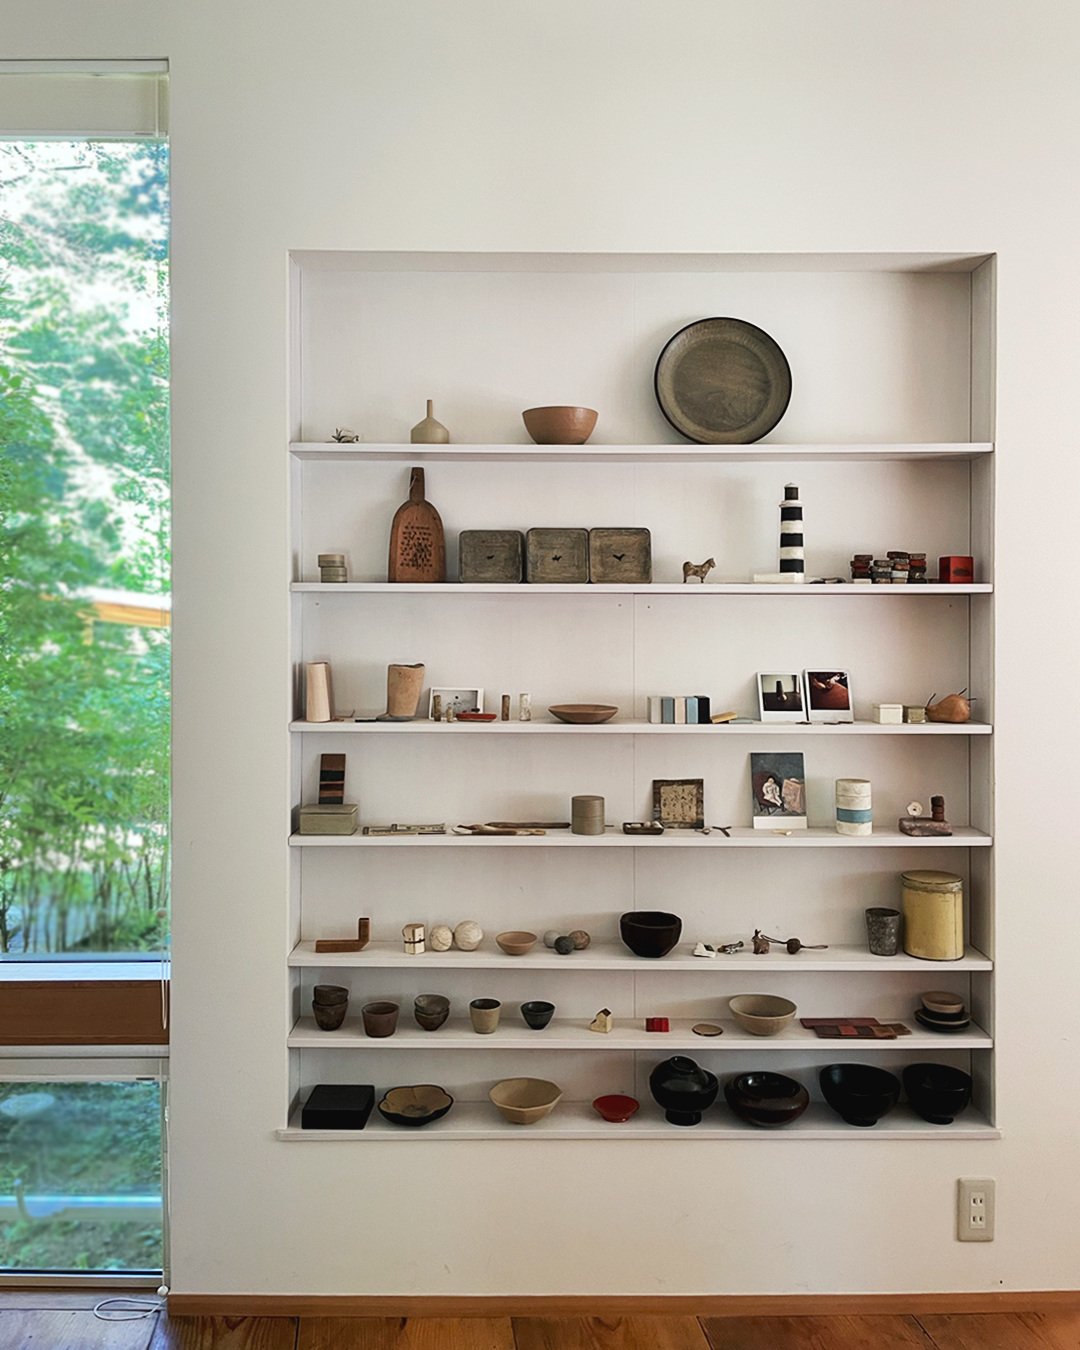 Shelves at Ryuji Mitani's studio that hold various wood art and tableware